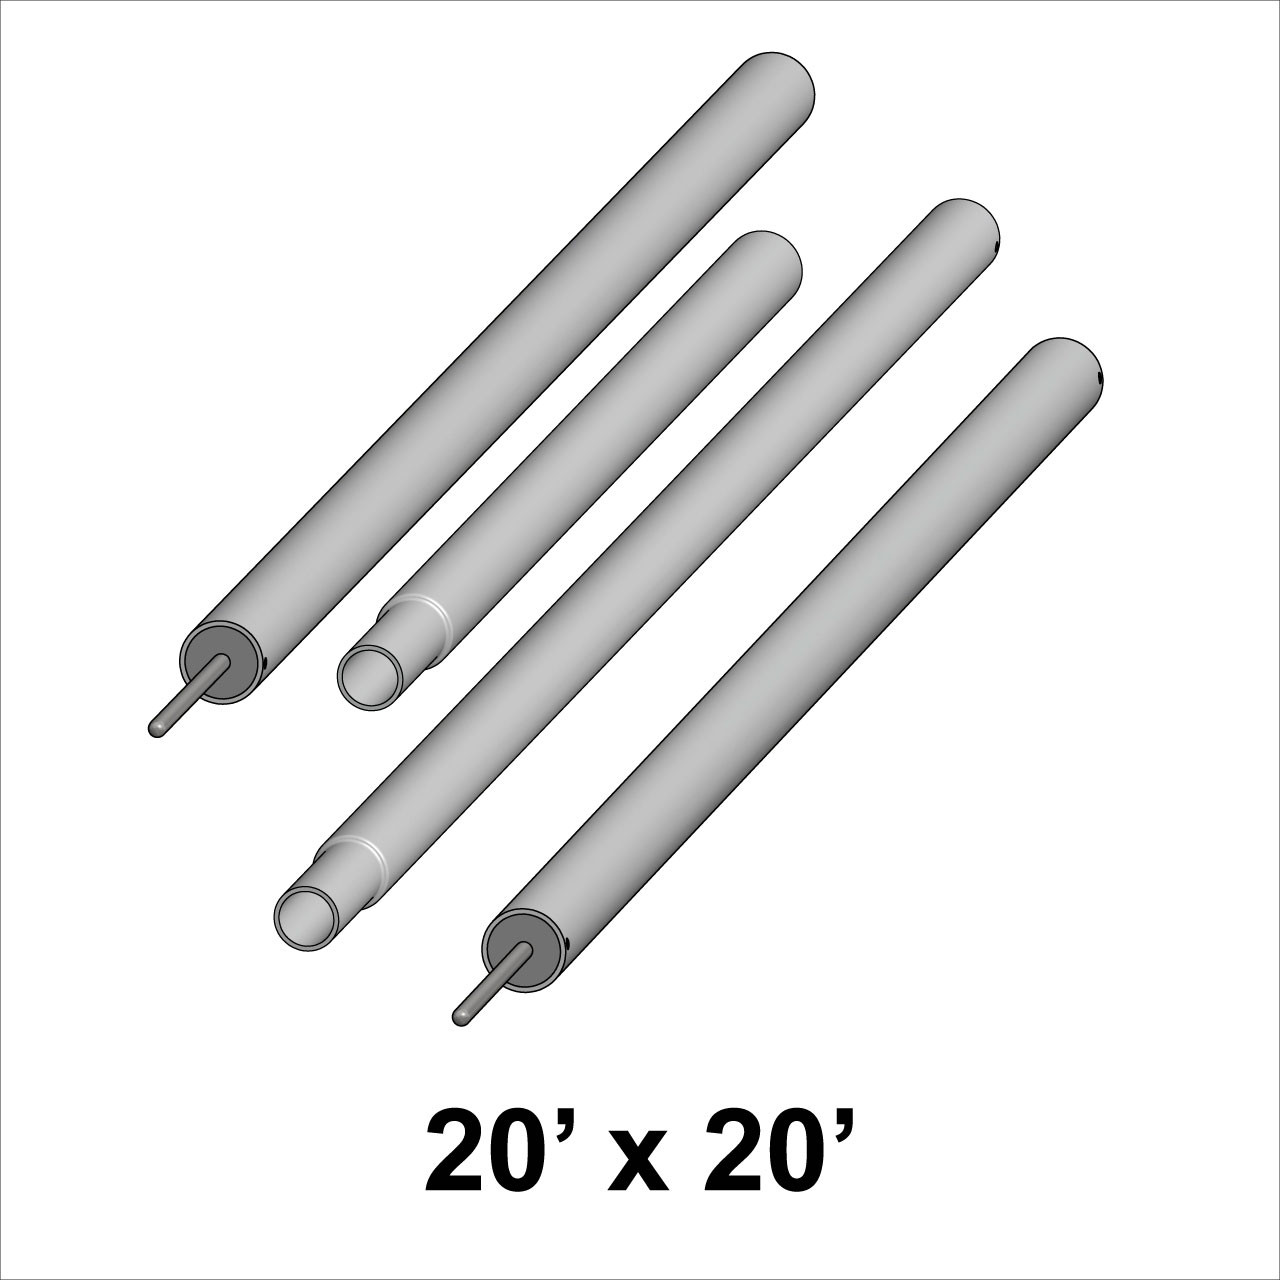 20' x 20' Classic Series Pole Kit